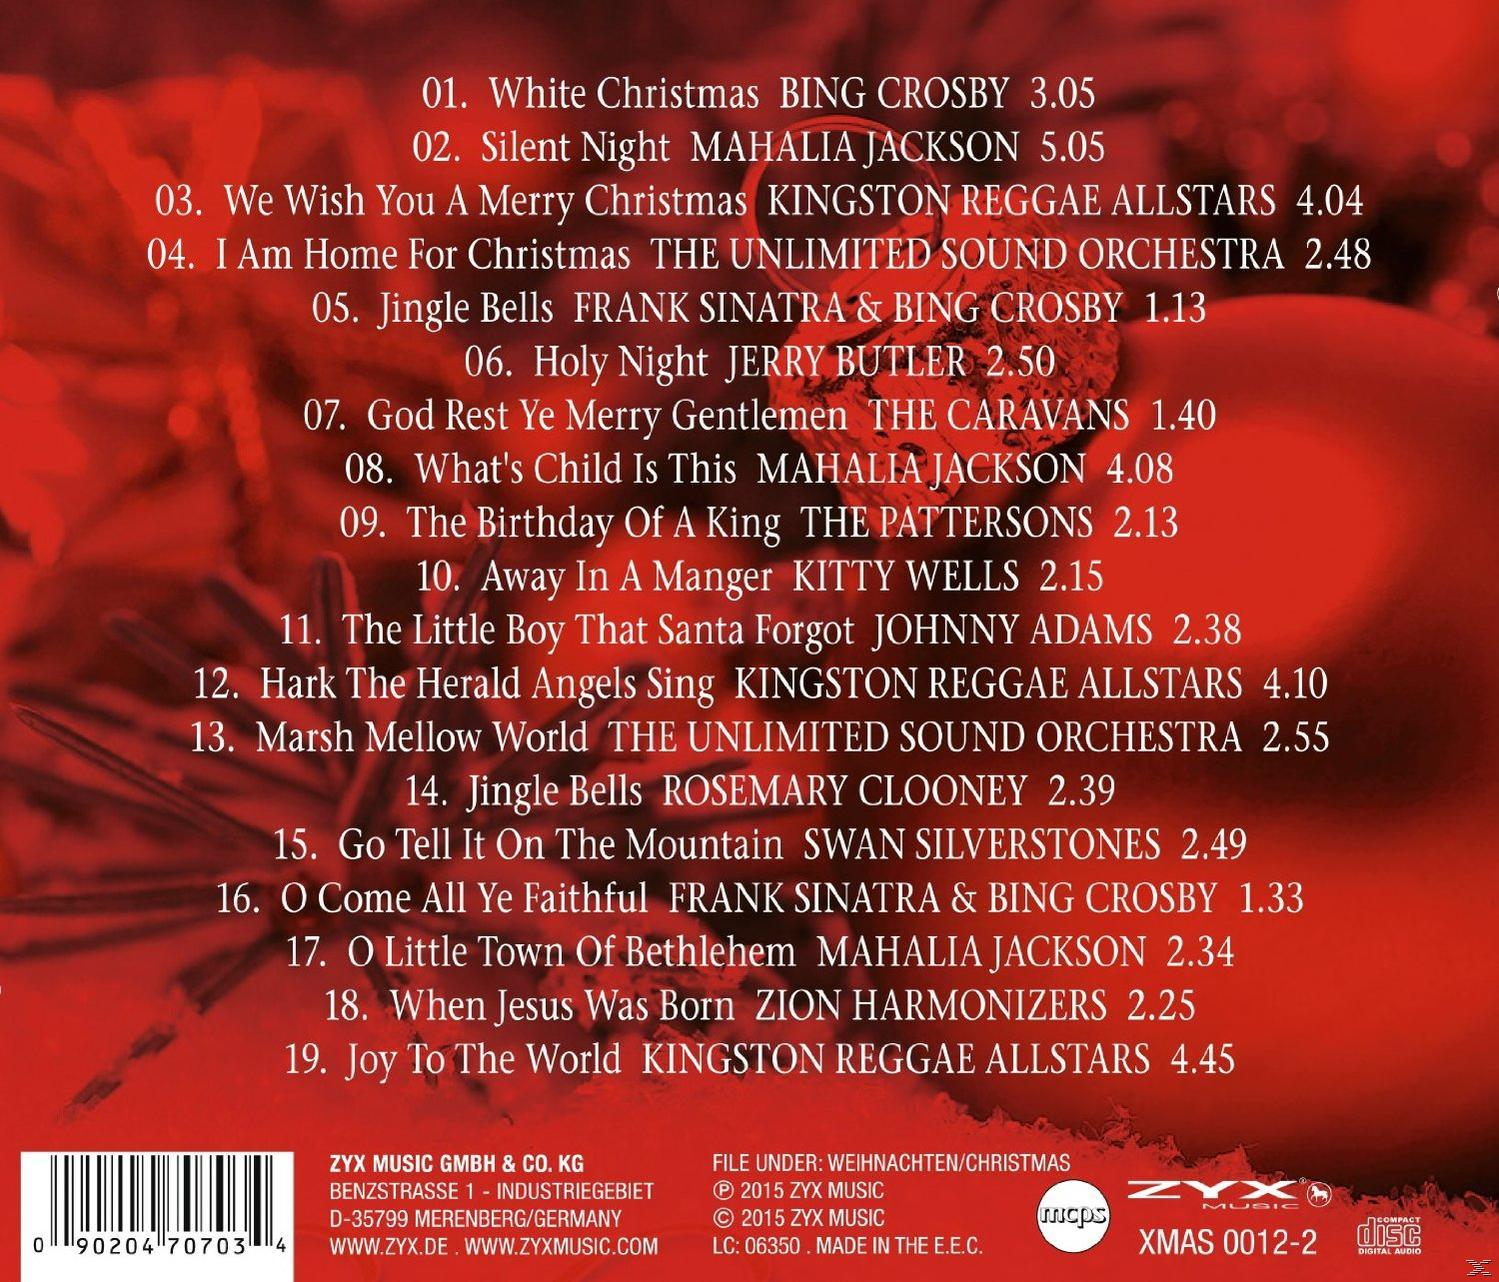 VARIOUS - Songs Christmas - International (CD)